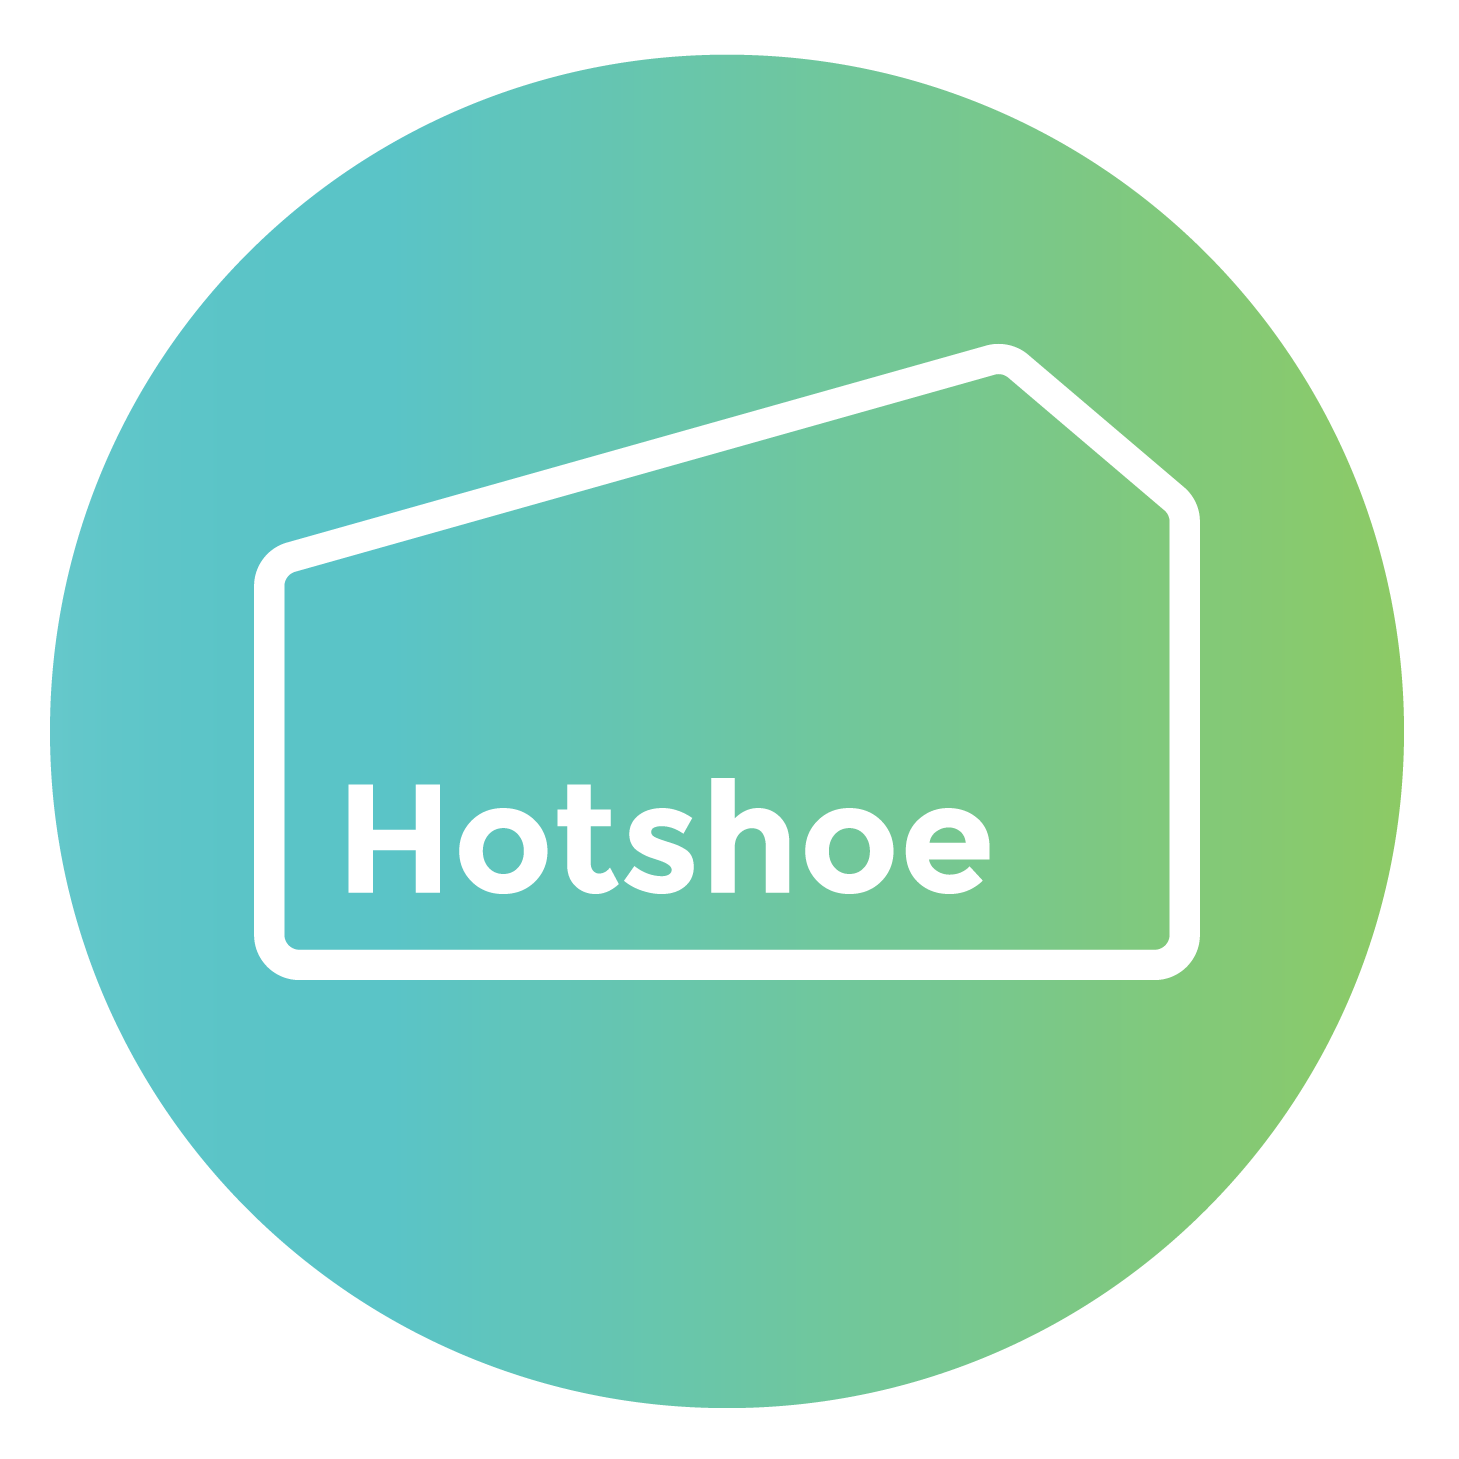 The Hotshoe Platform